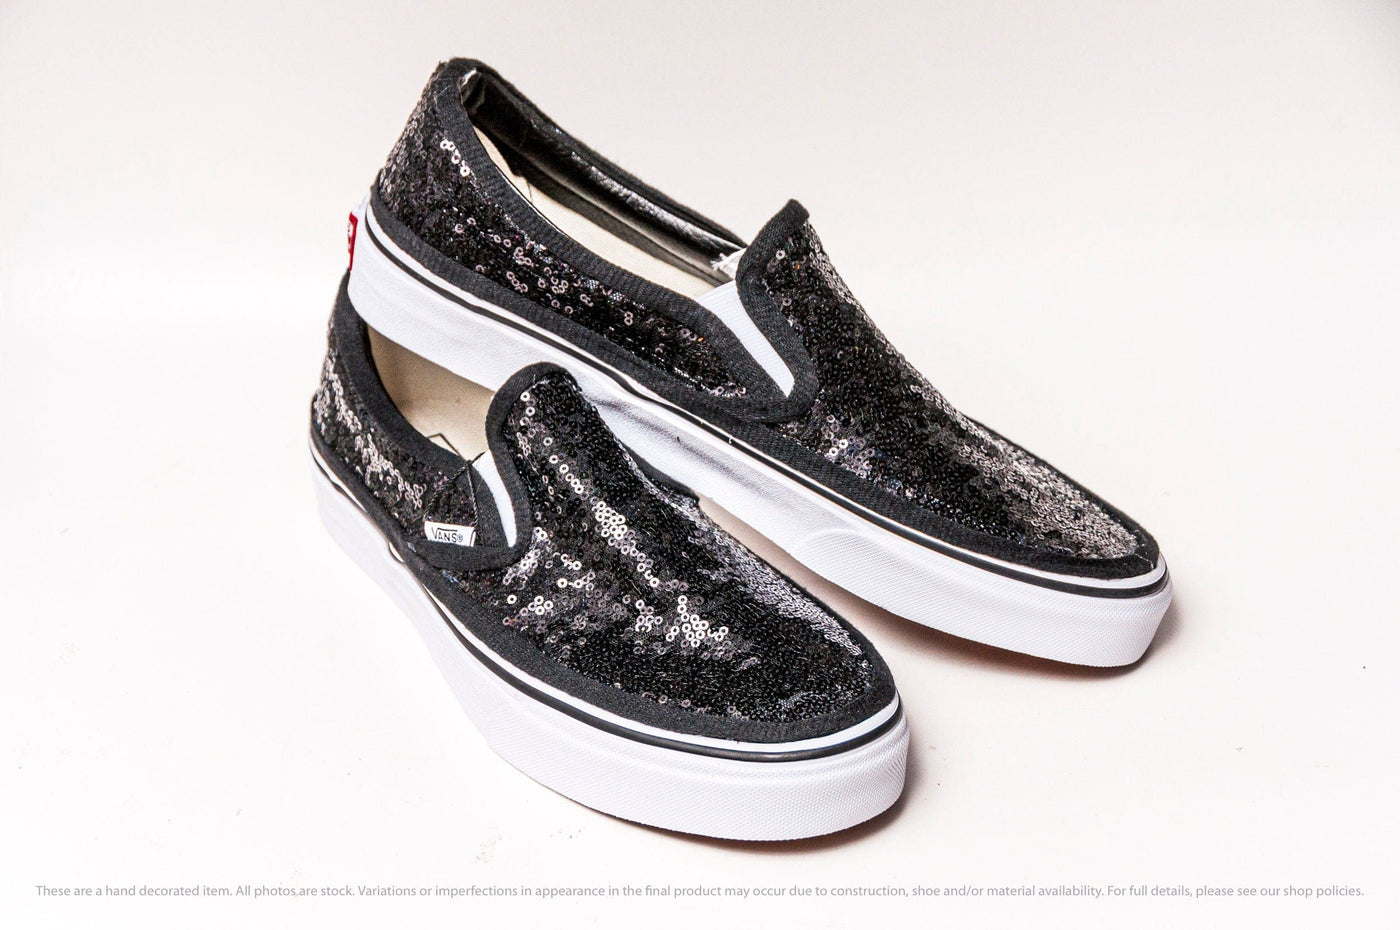 Black Starlight Sequin Slip On Sneakers